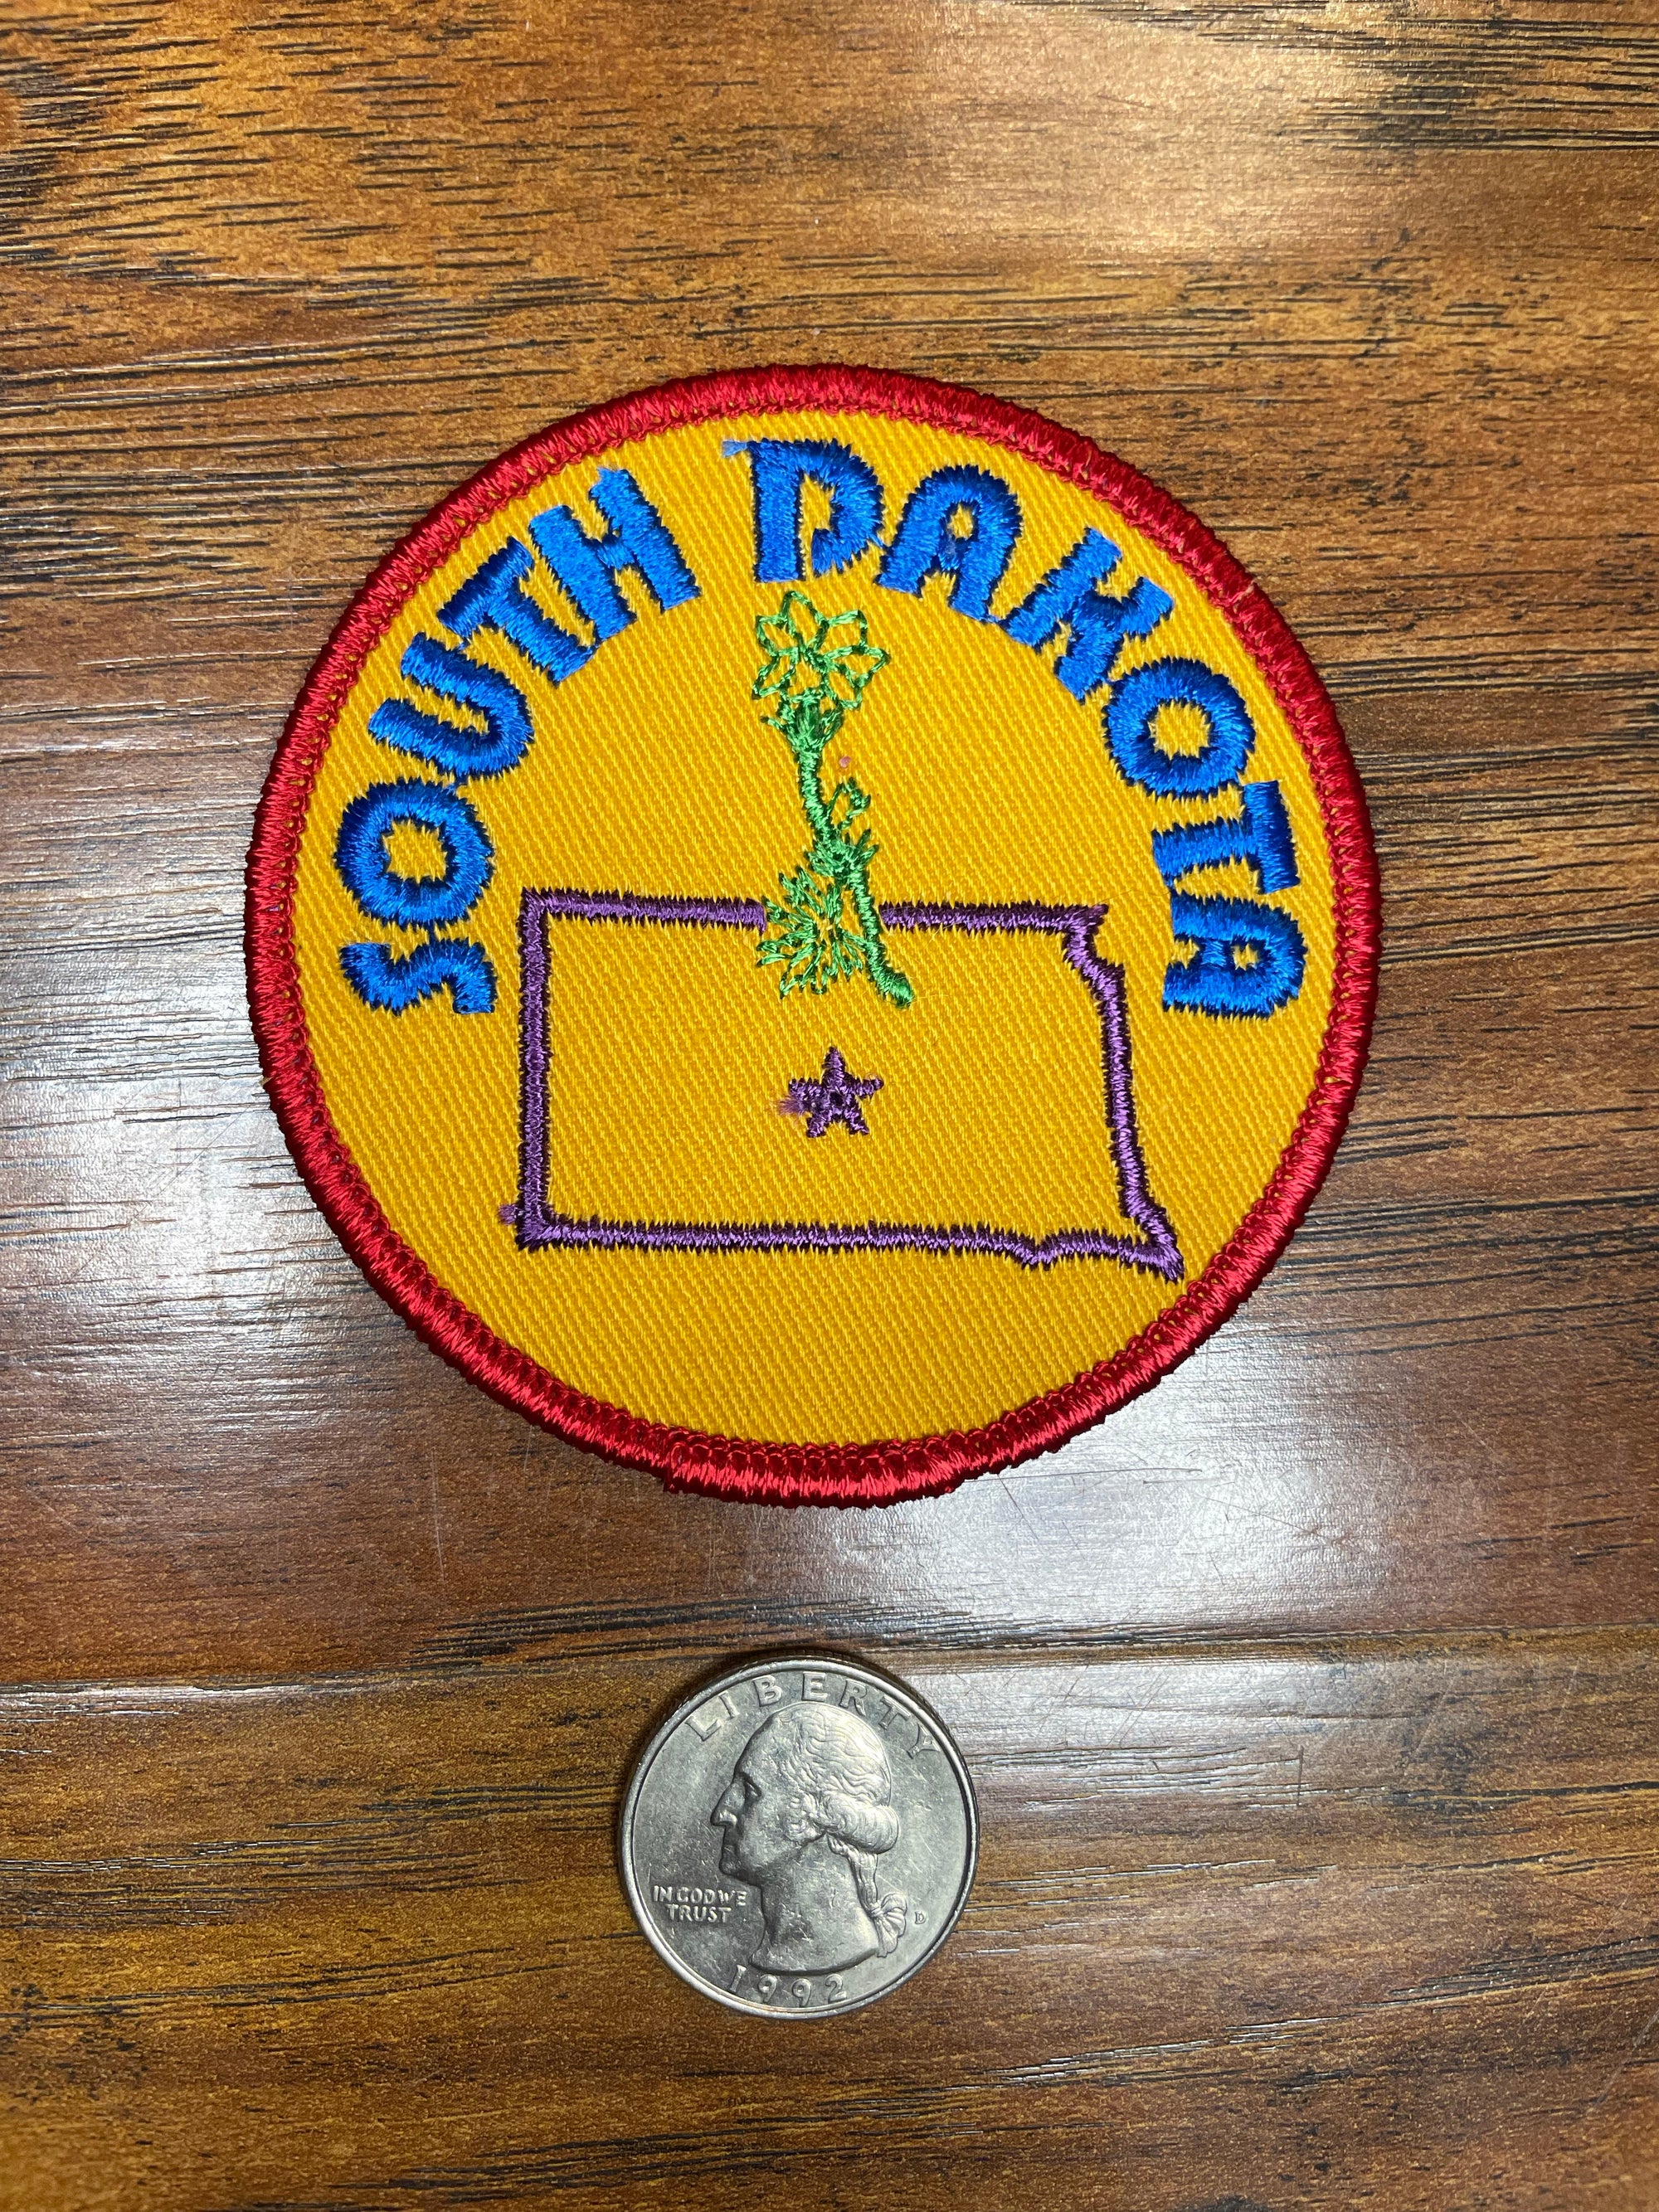 Vintage South Dakota